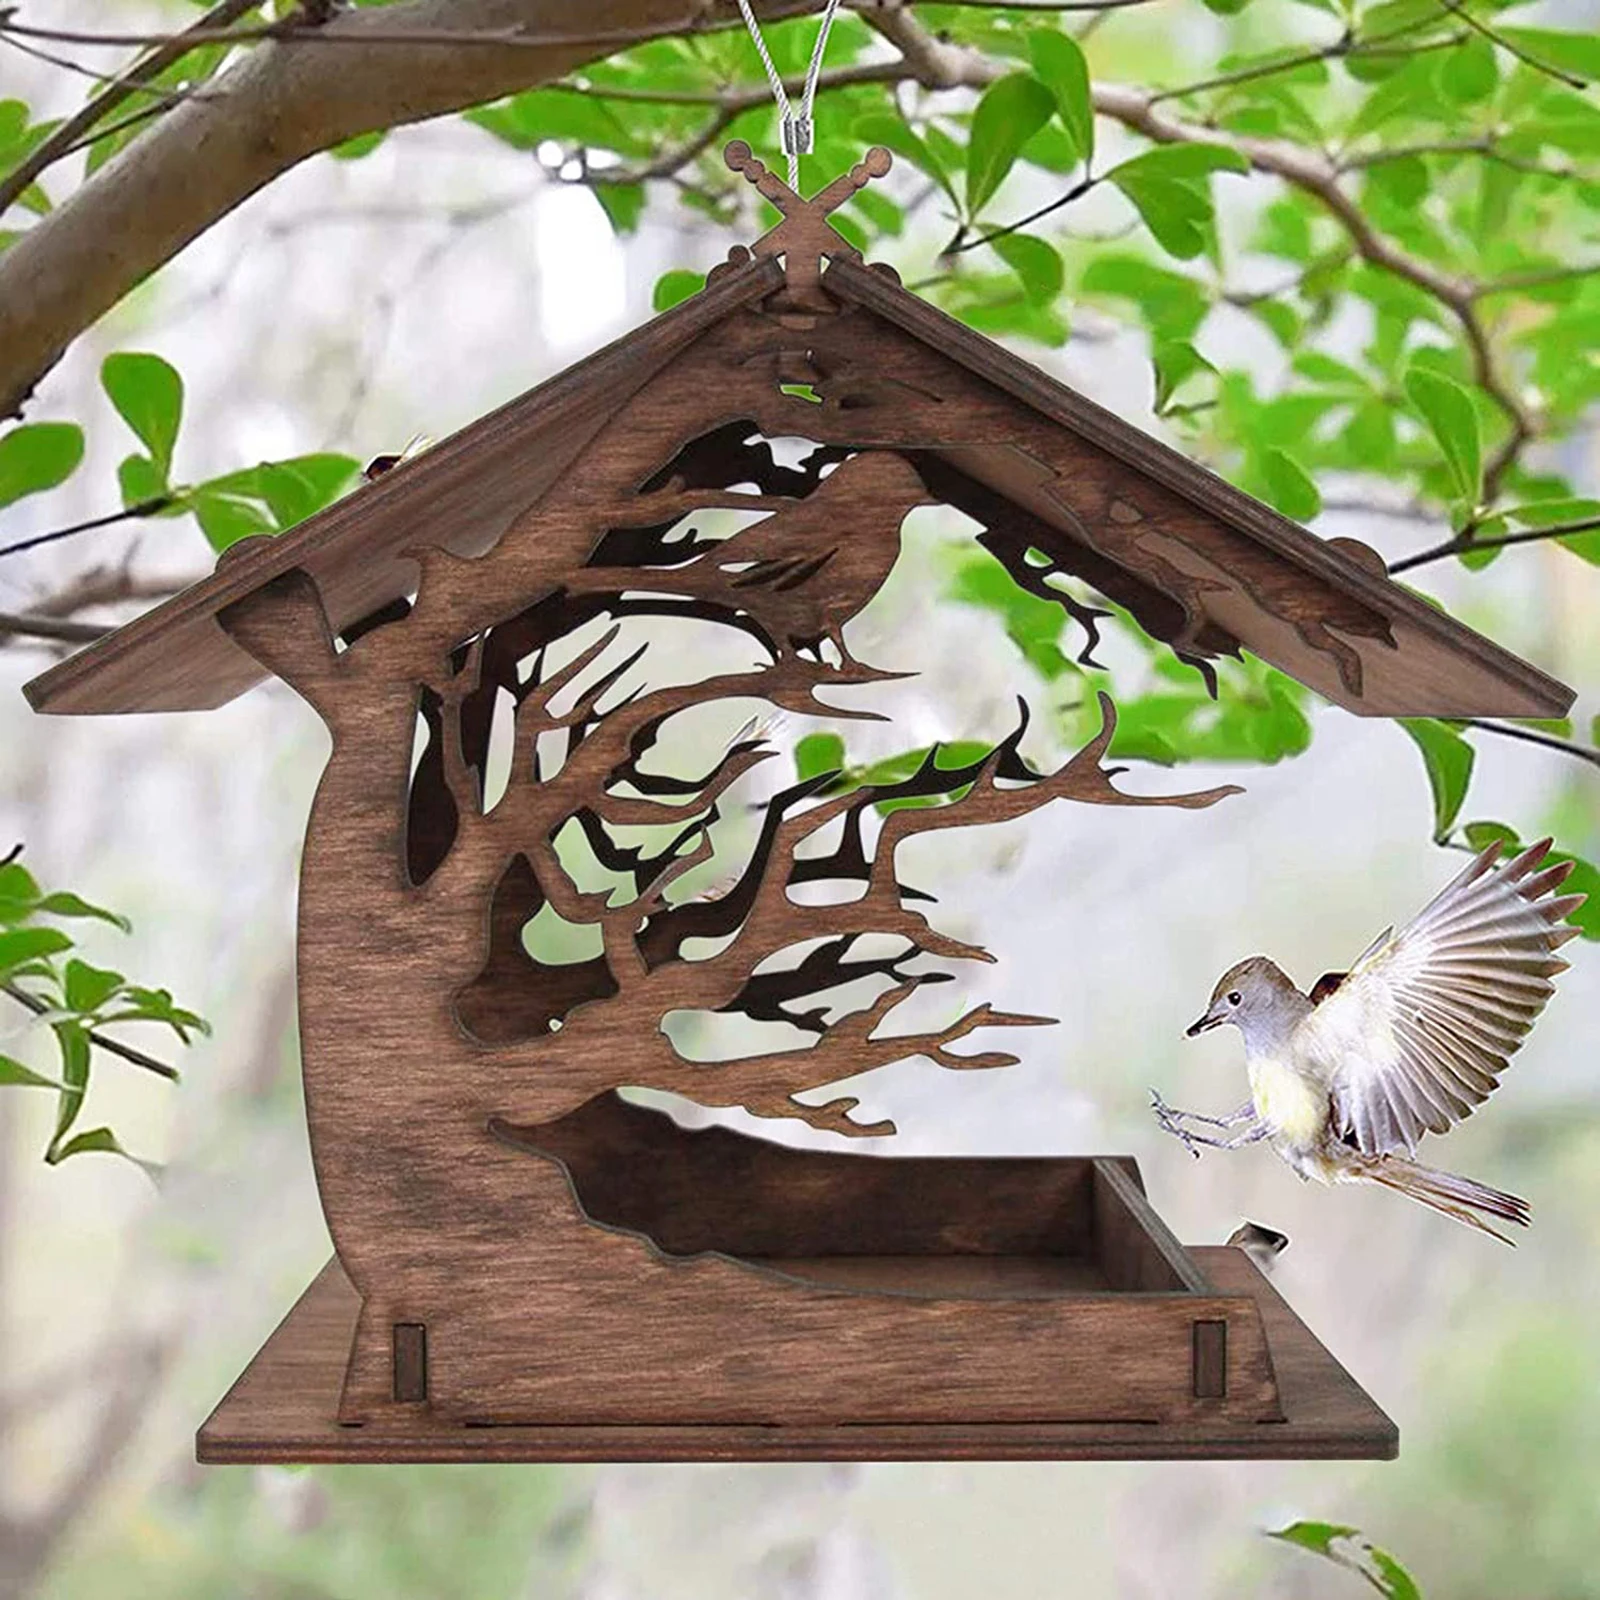 Wooden Birdhouse Bird Feeder Yard Hanging Ornament Feeding Tray Dispenser